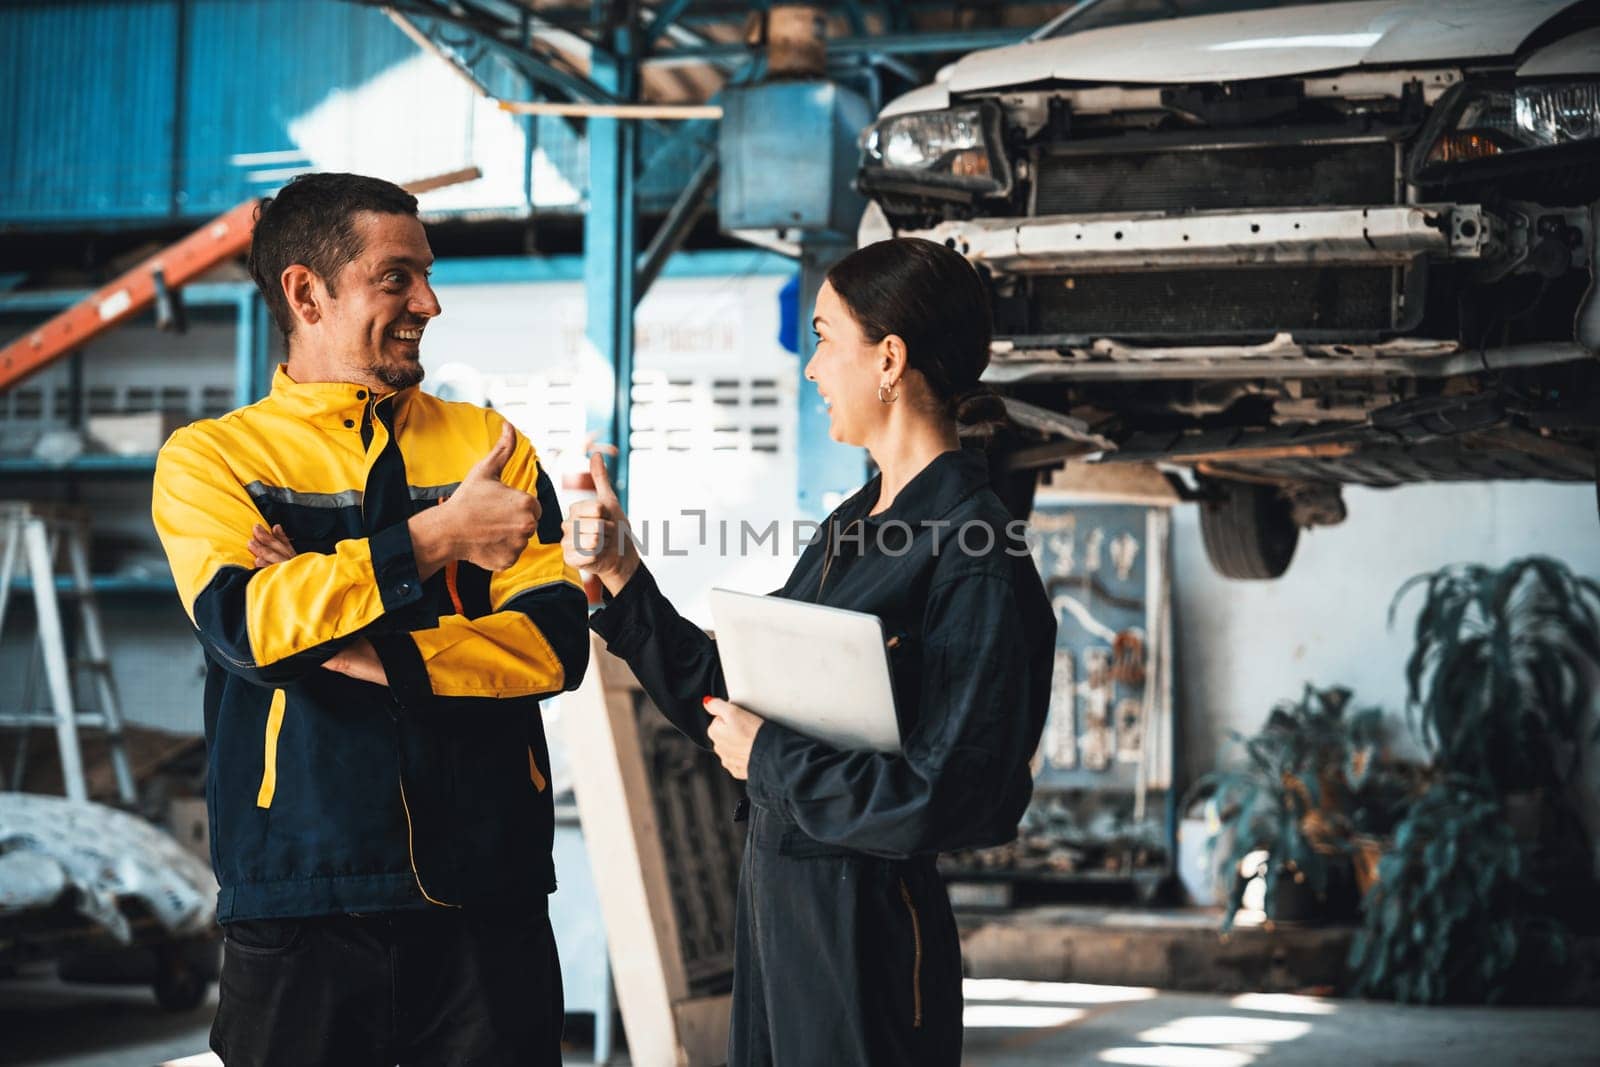 Technician team enjoy accomplishment together in garage. Oxus by biancoblue